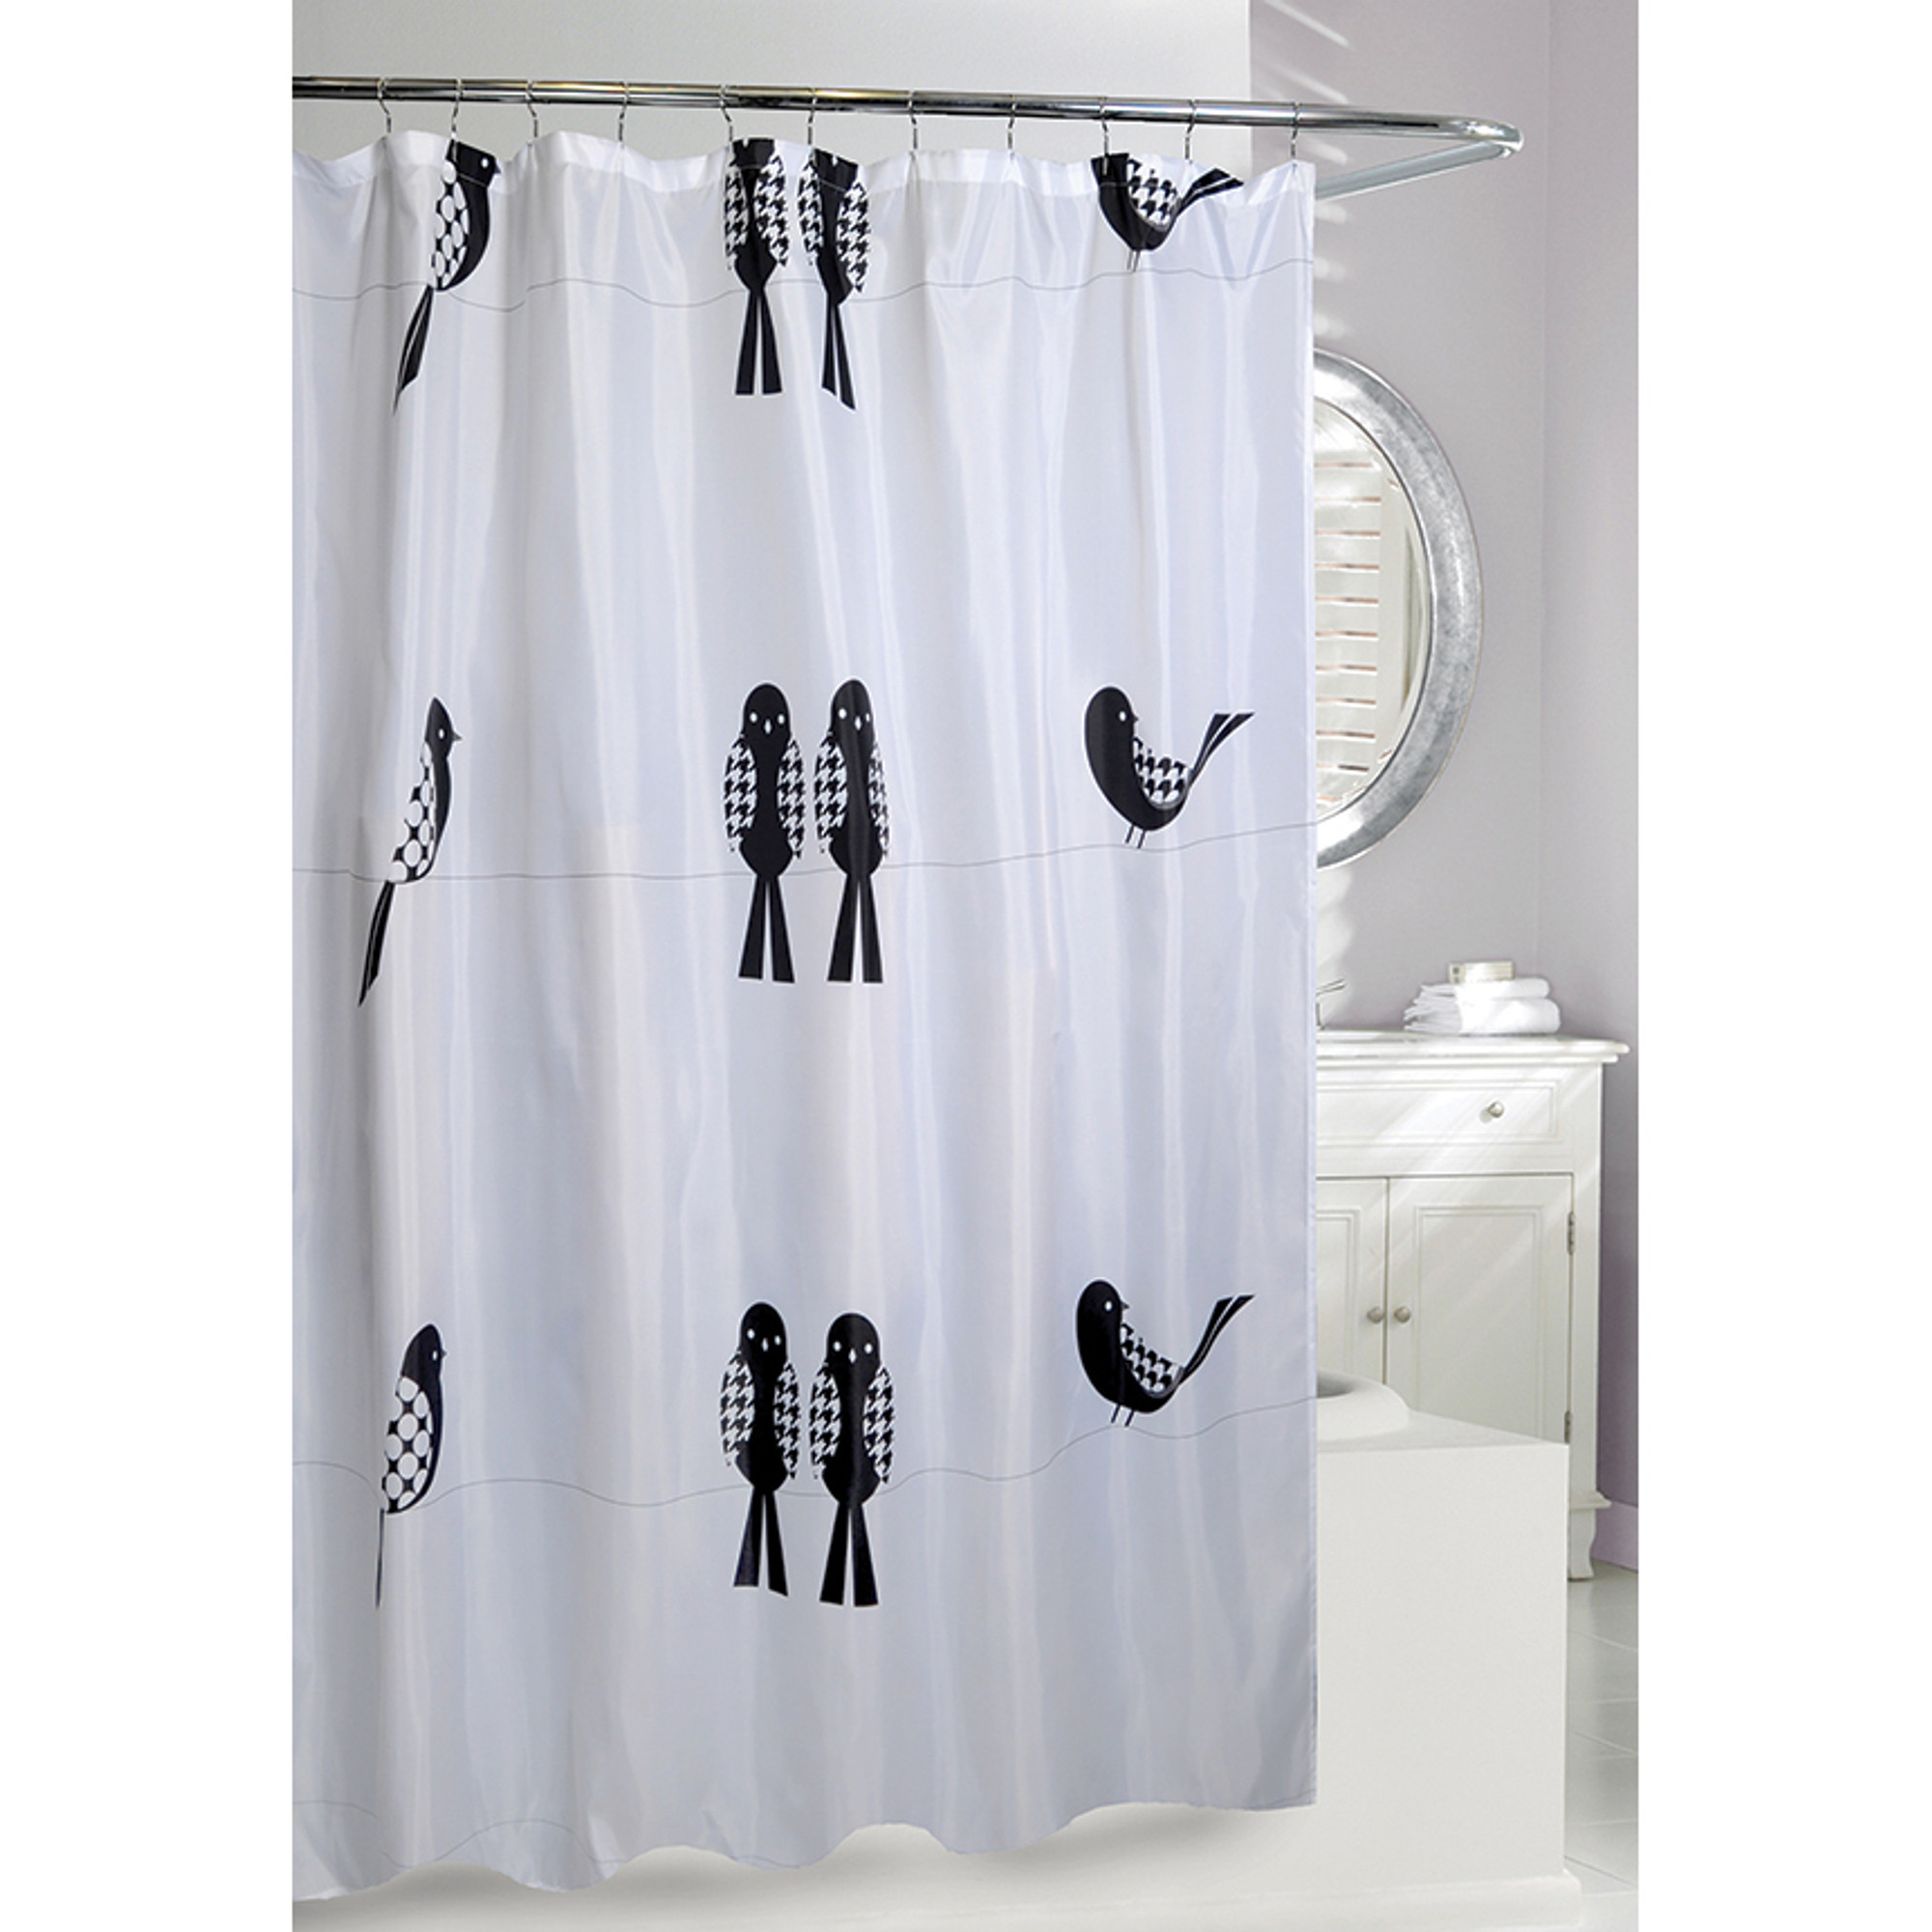 black fabric shower curtain